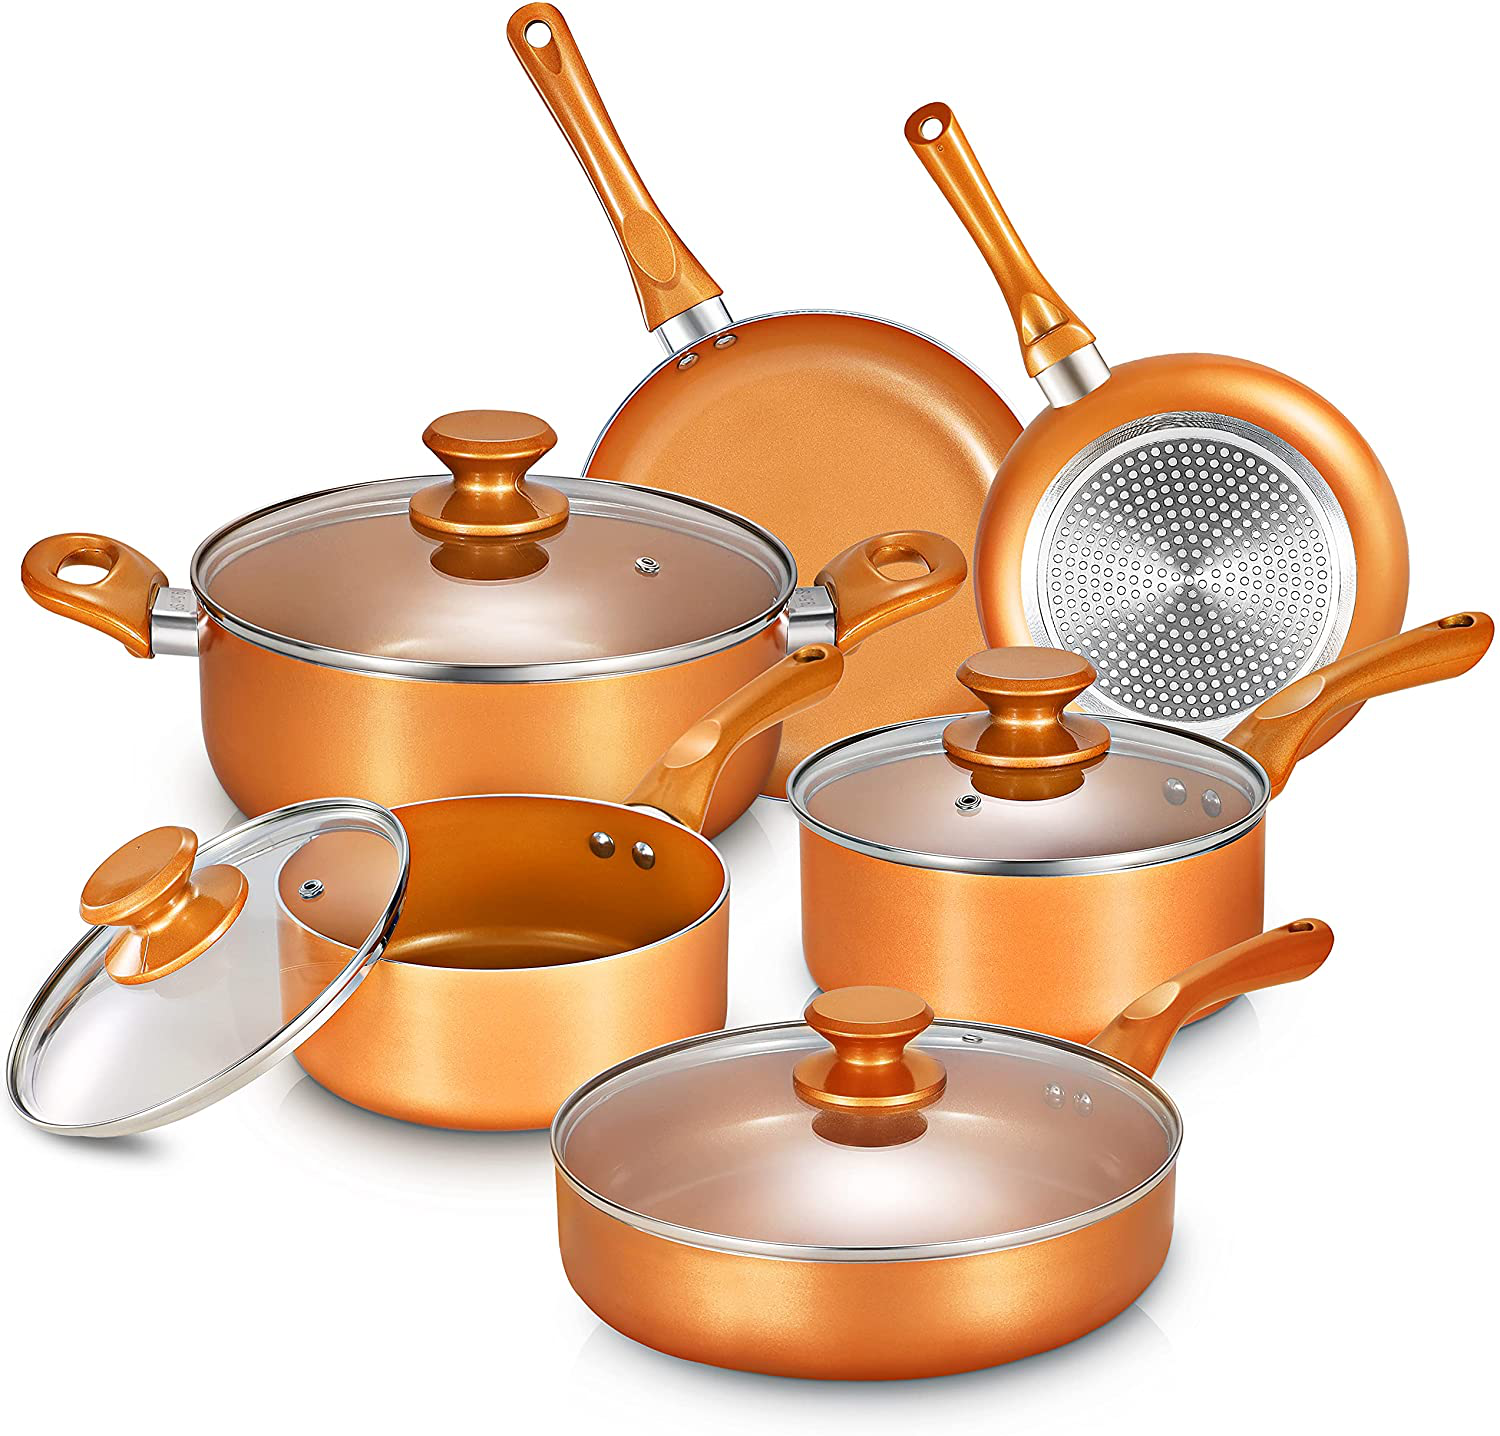 Clockitchen 6 Pieces Pots and Pans Set,Aluminum Cookware Set, Nonstick Ceramic Coating, Fry Pan, Stockpot with Lid, Blue